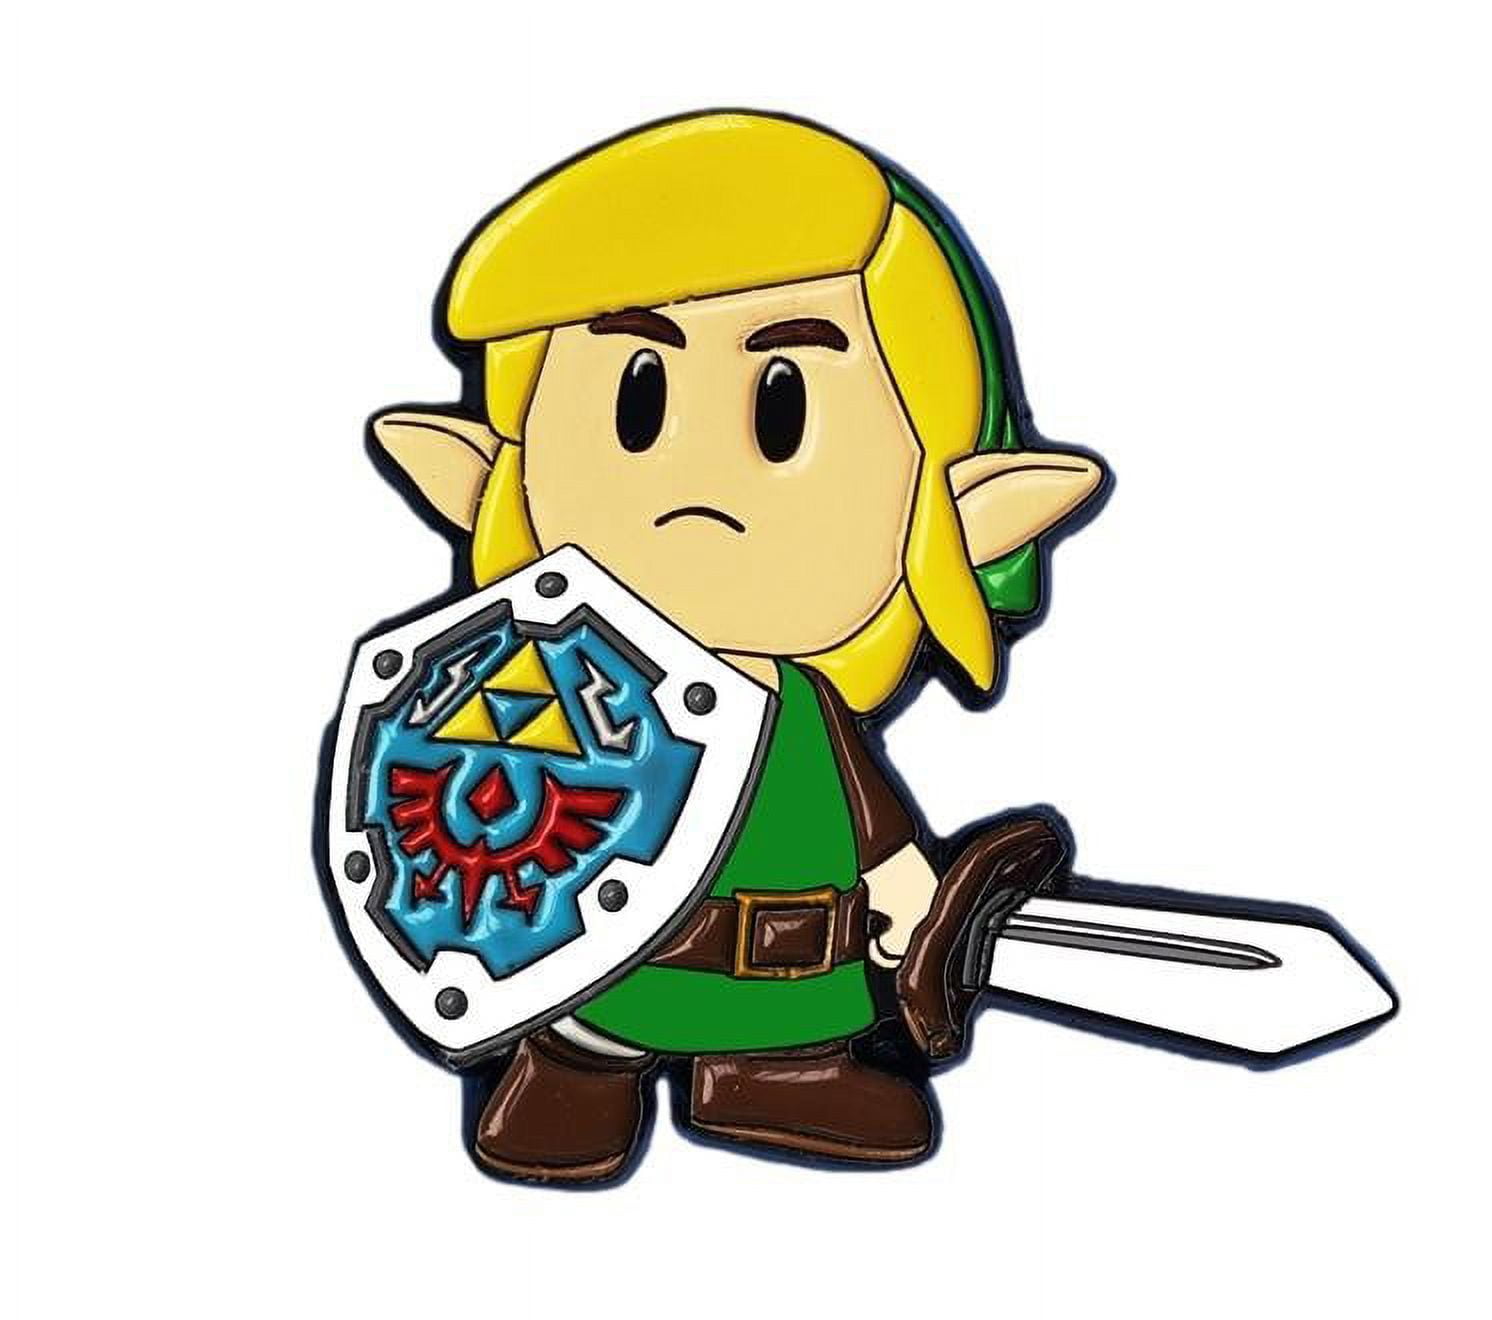 The Legend of Zelda Ocarina of Time Lapel Pin